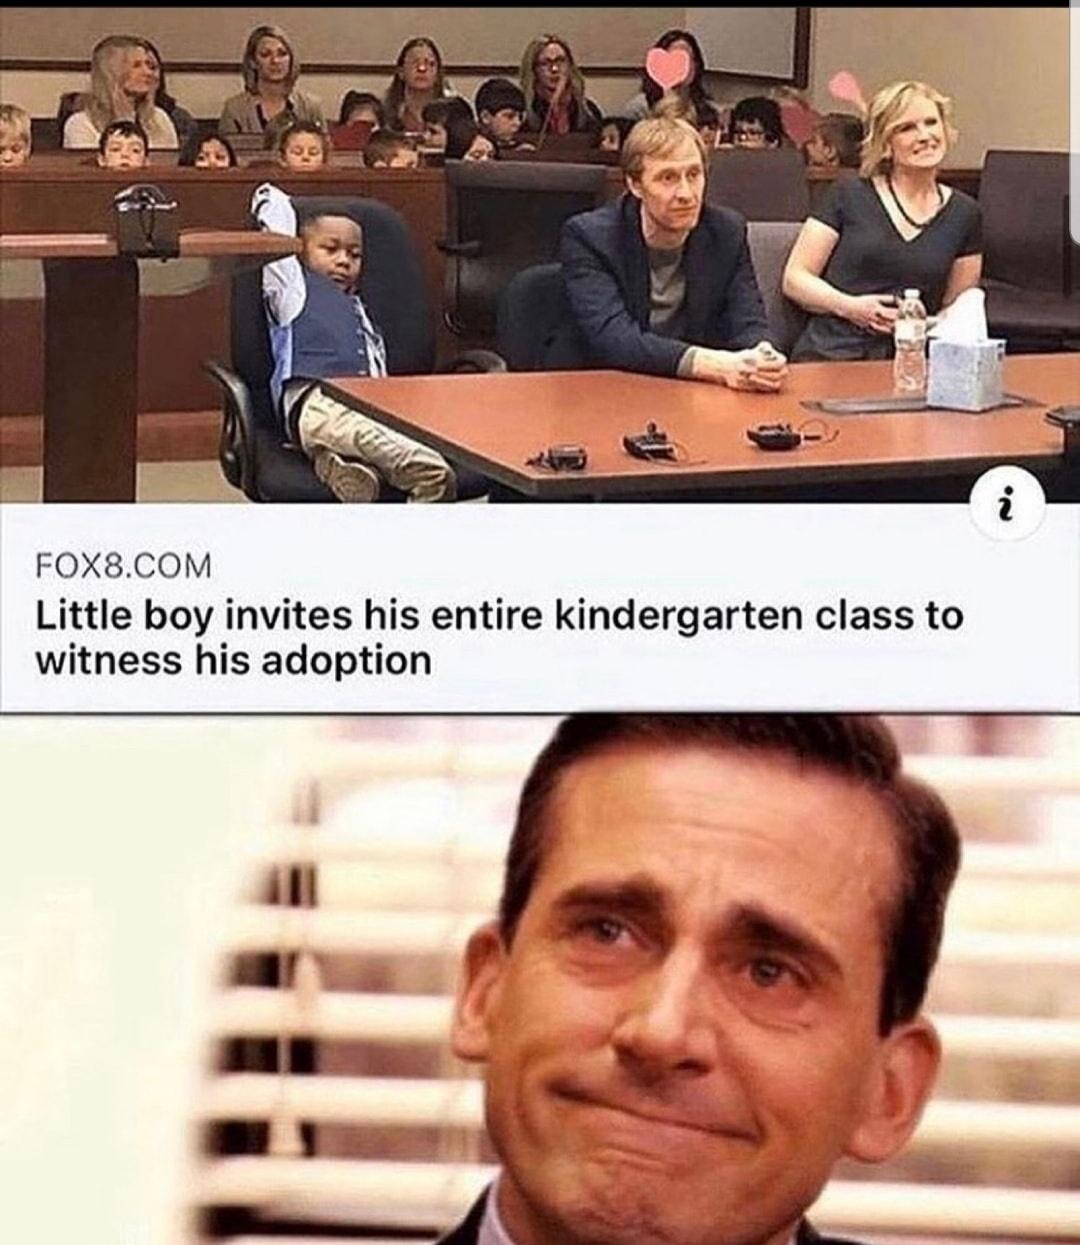 little boy invites kindergarten class to adoption - i N. FOX8.Com Little boy invites his entire kindergarten class to witness his adoption